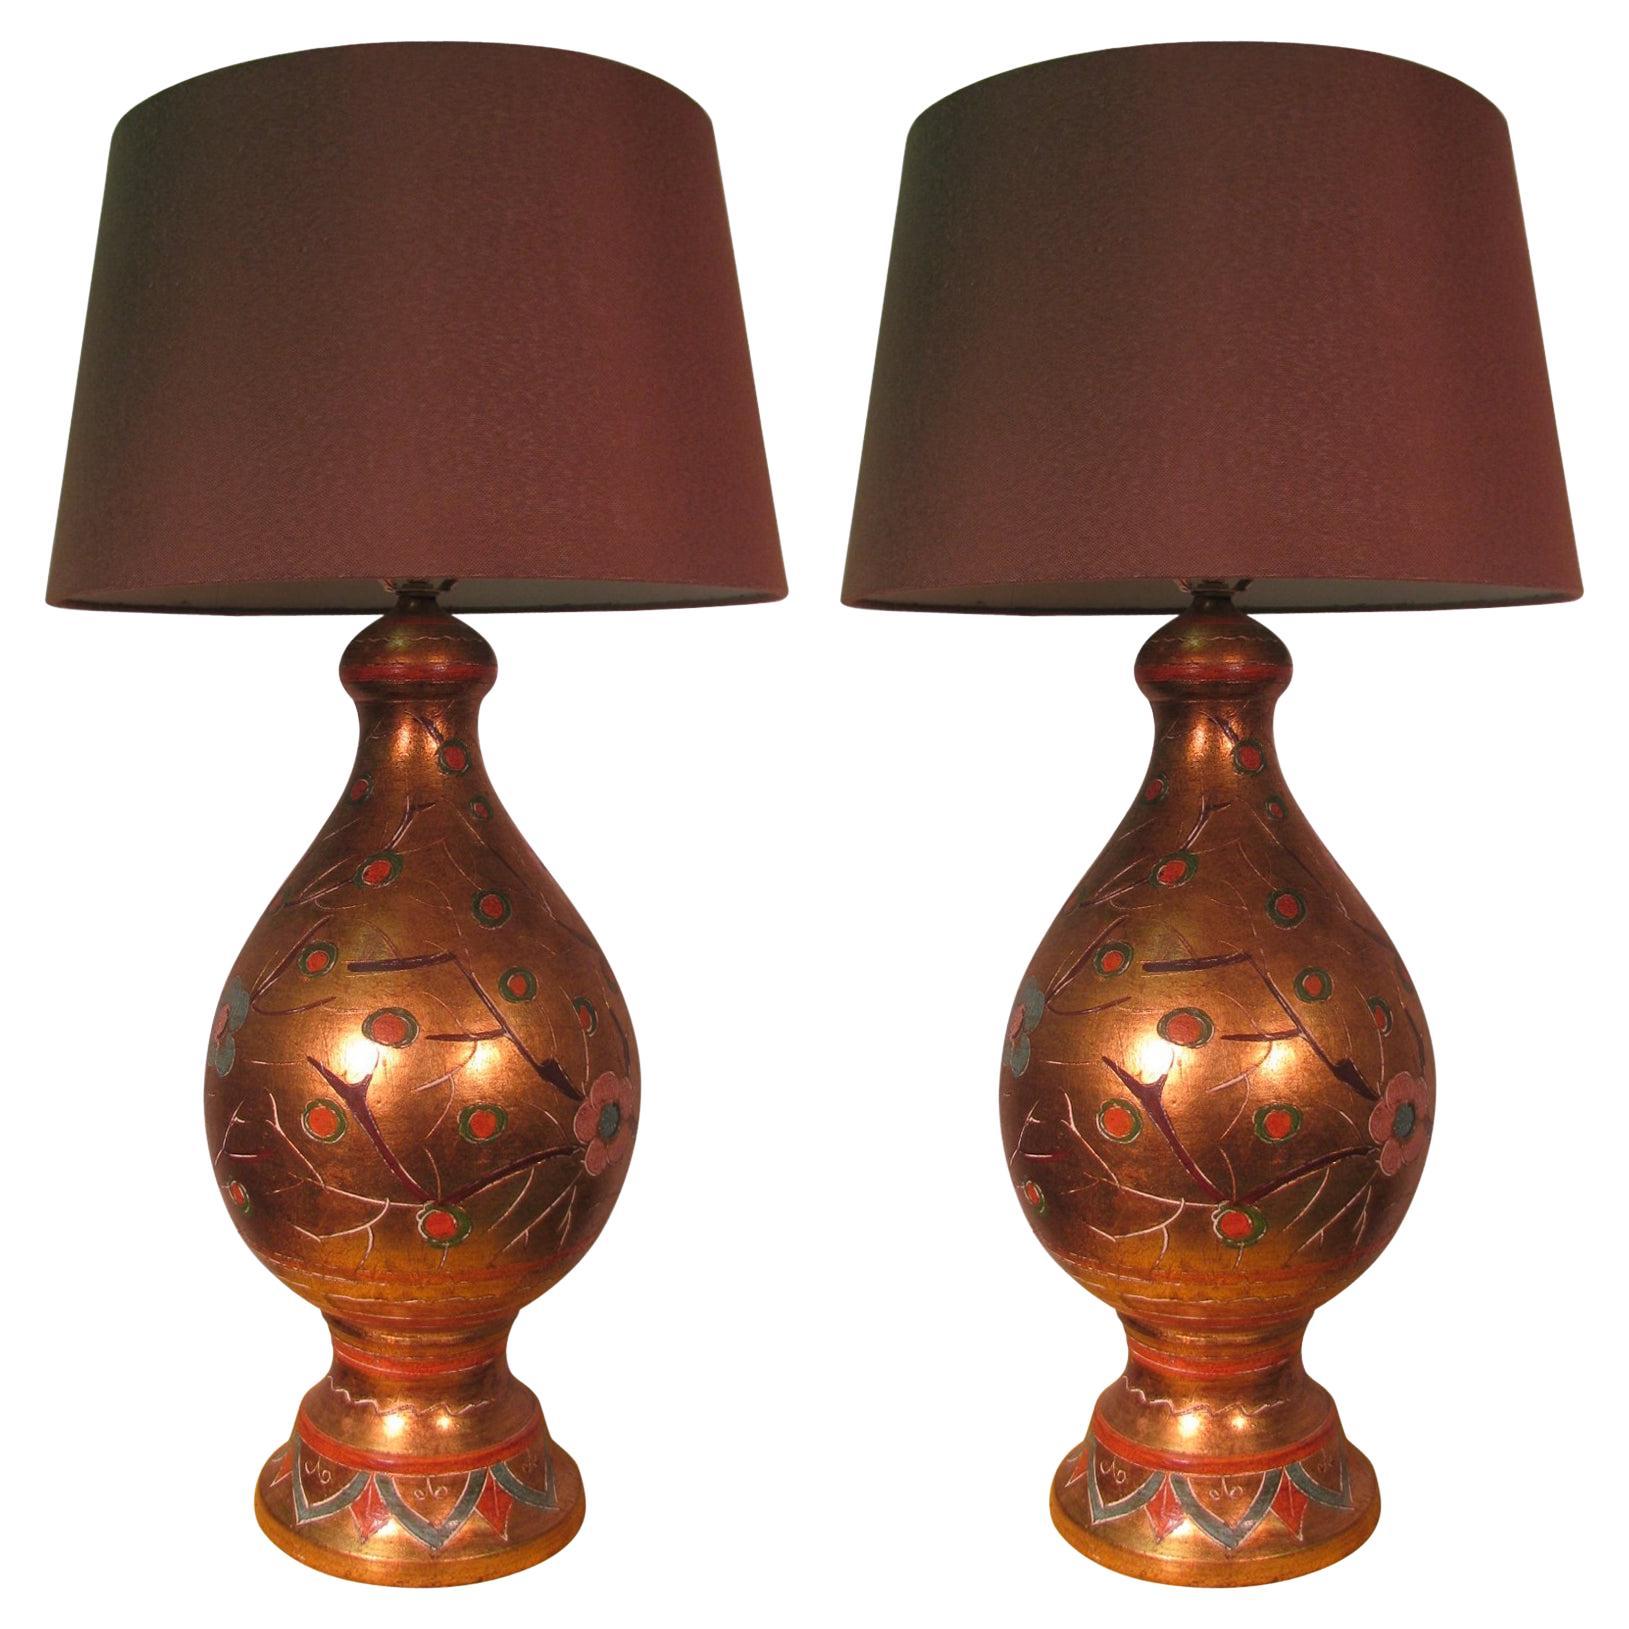 Pair of Hollywood Regency Handmade Italian Terracotta Gilt Decorated Table Lamps